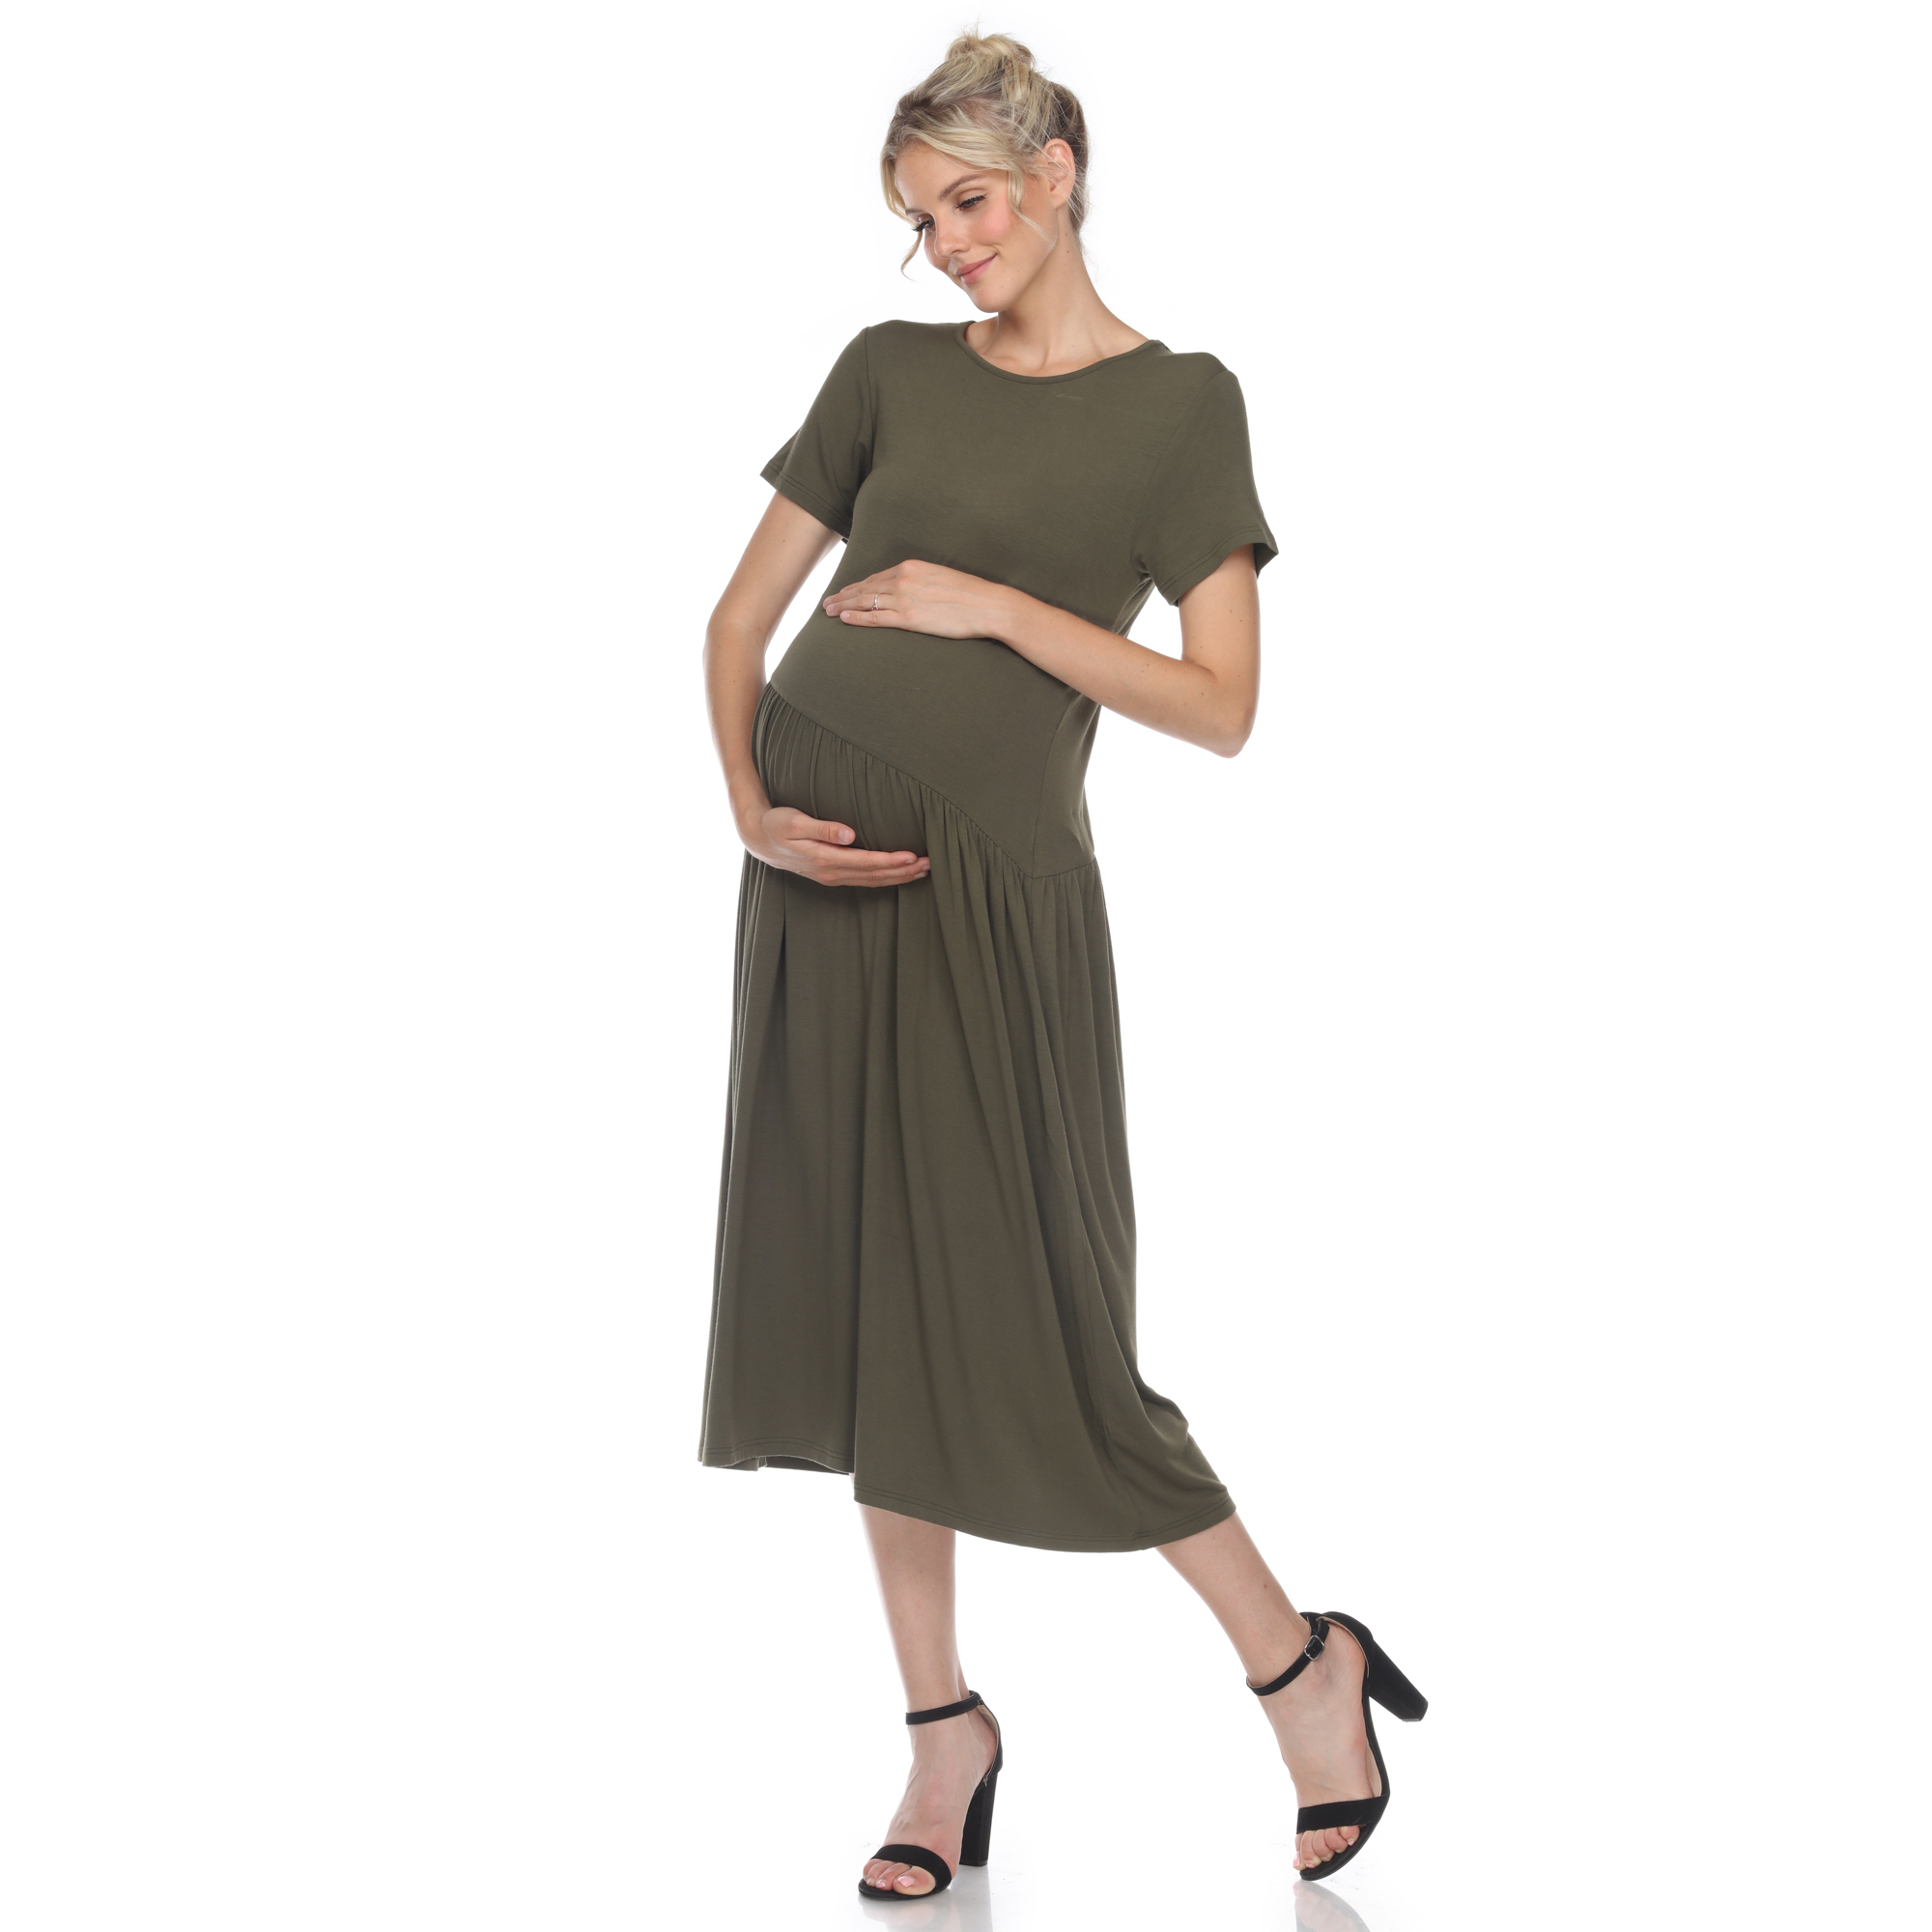 White Mark Womenâs Maternity Short Sleeve Maxi Dress - Olive, Medium